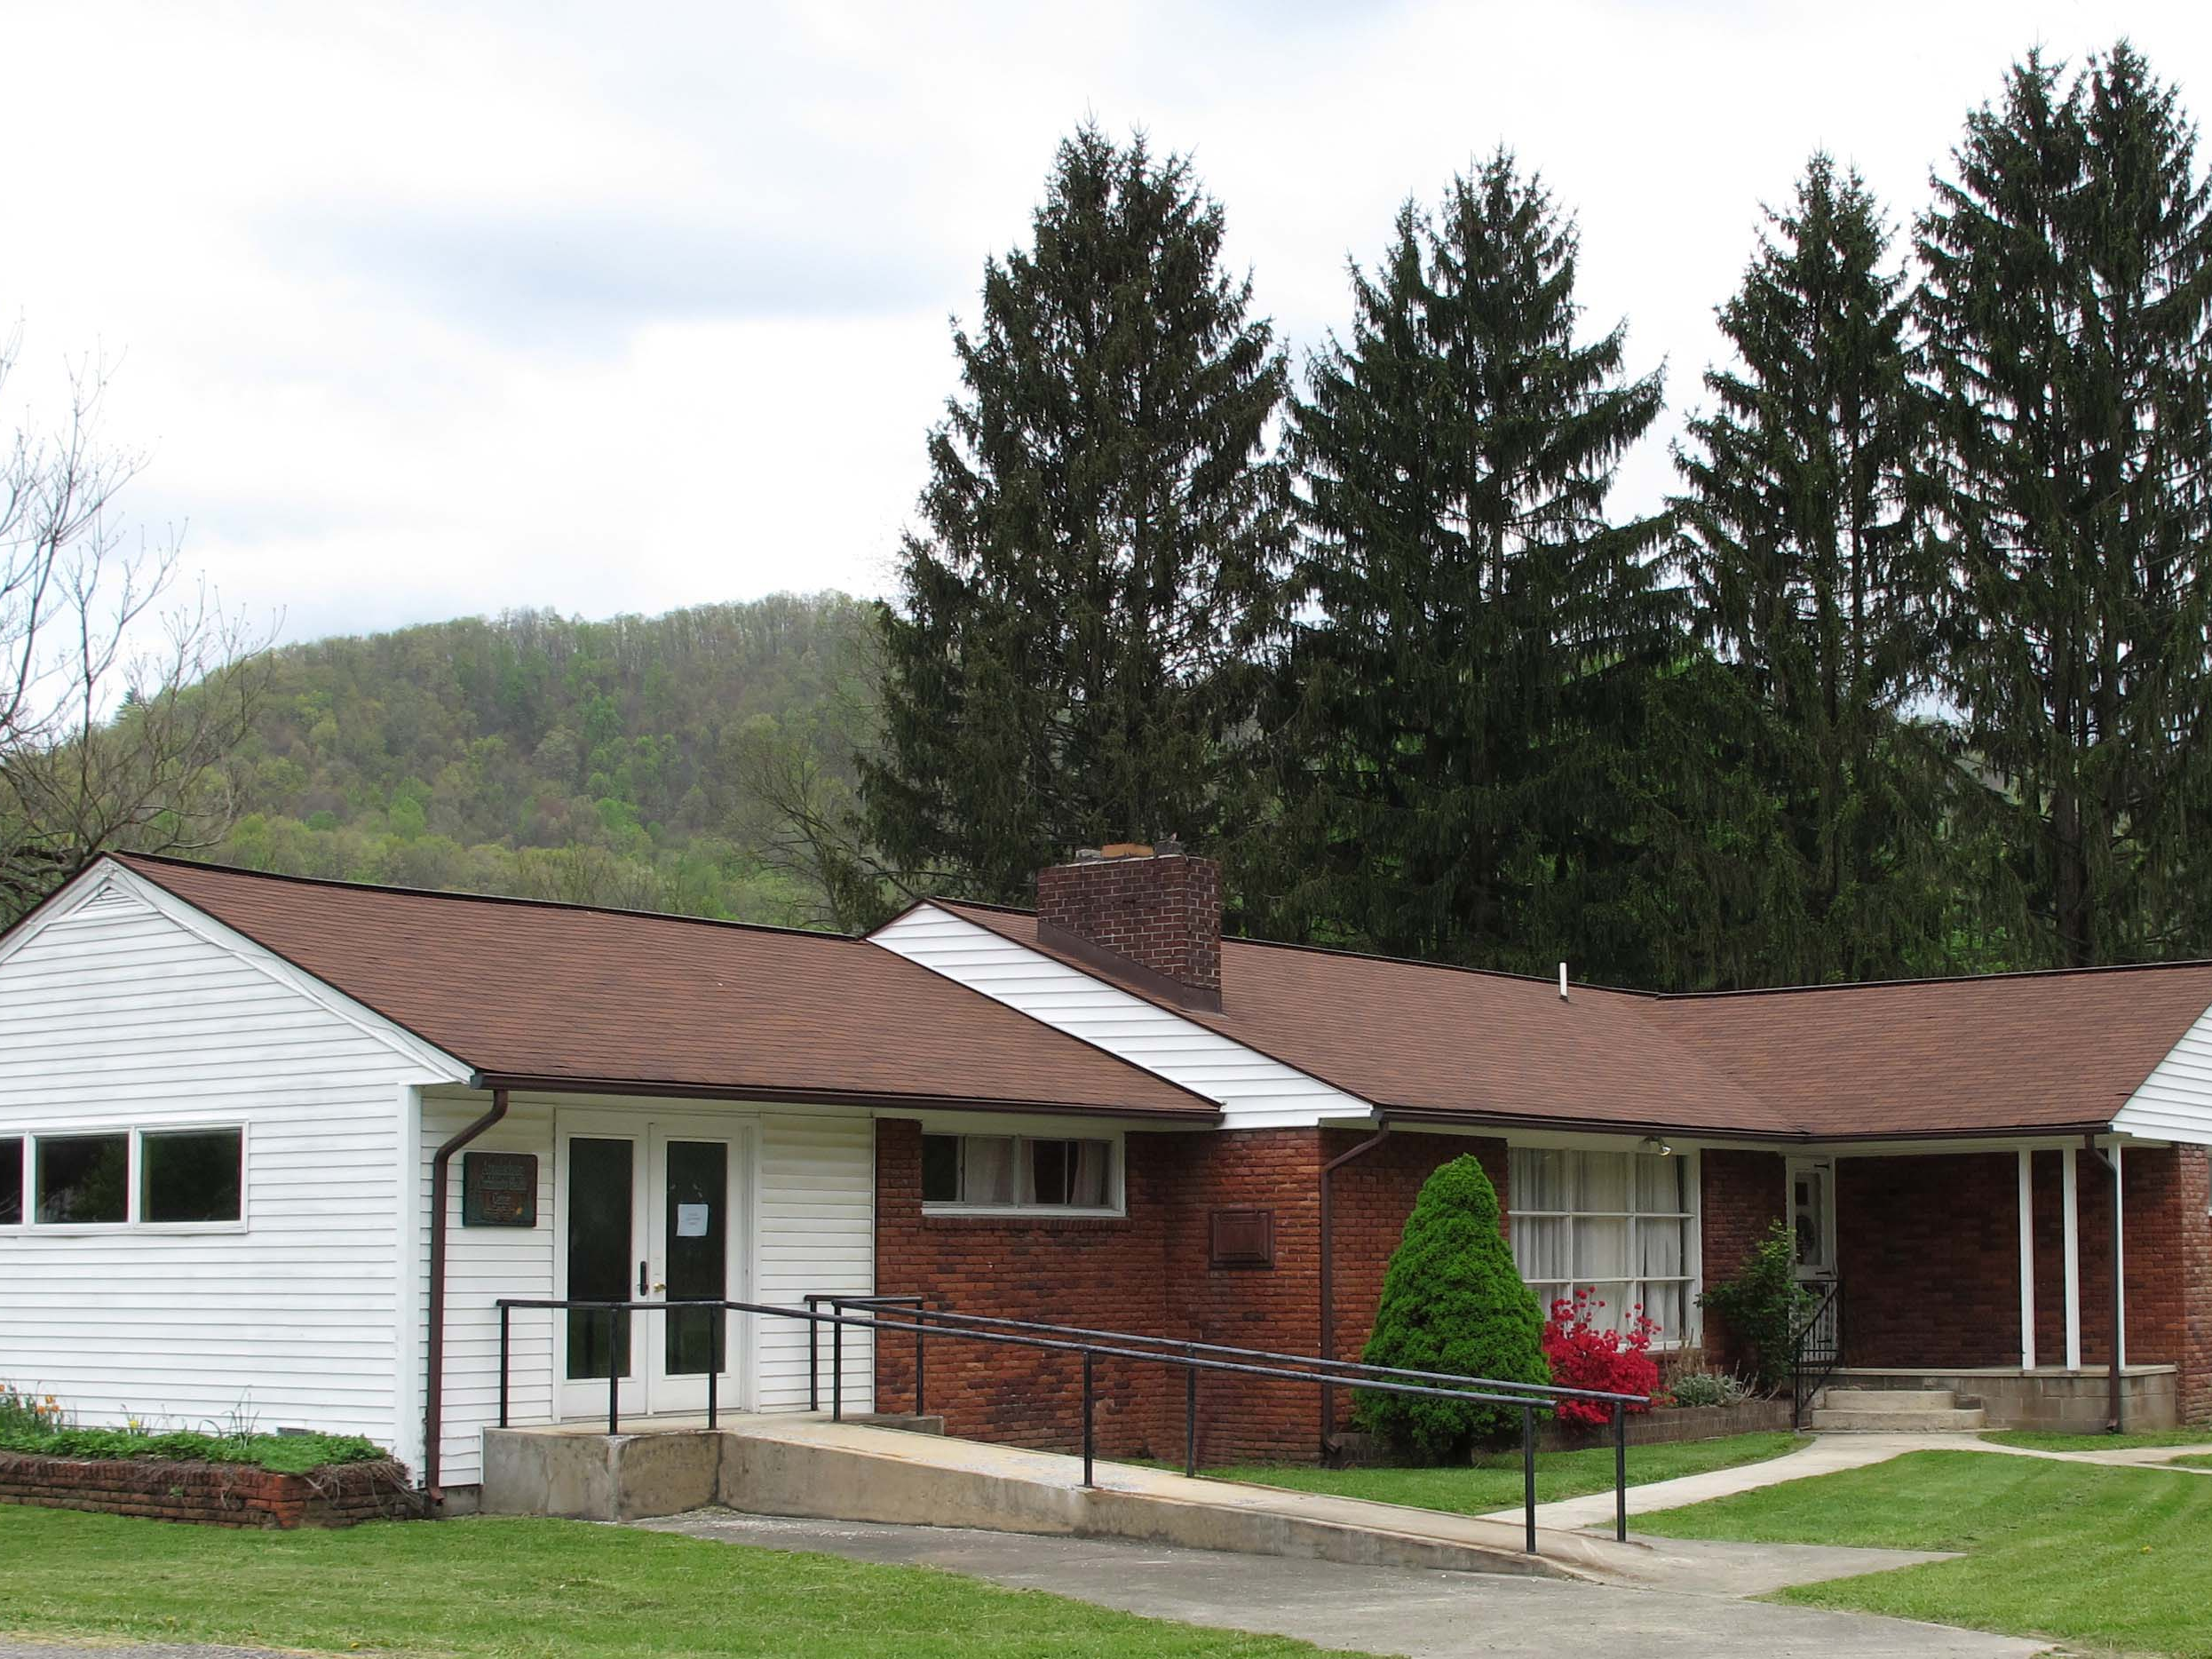 Appalachian Community Hlth Center